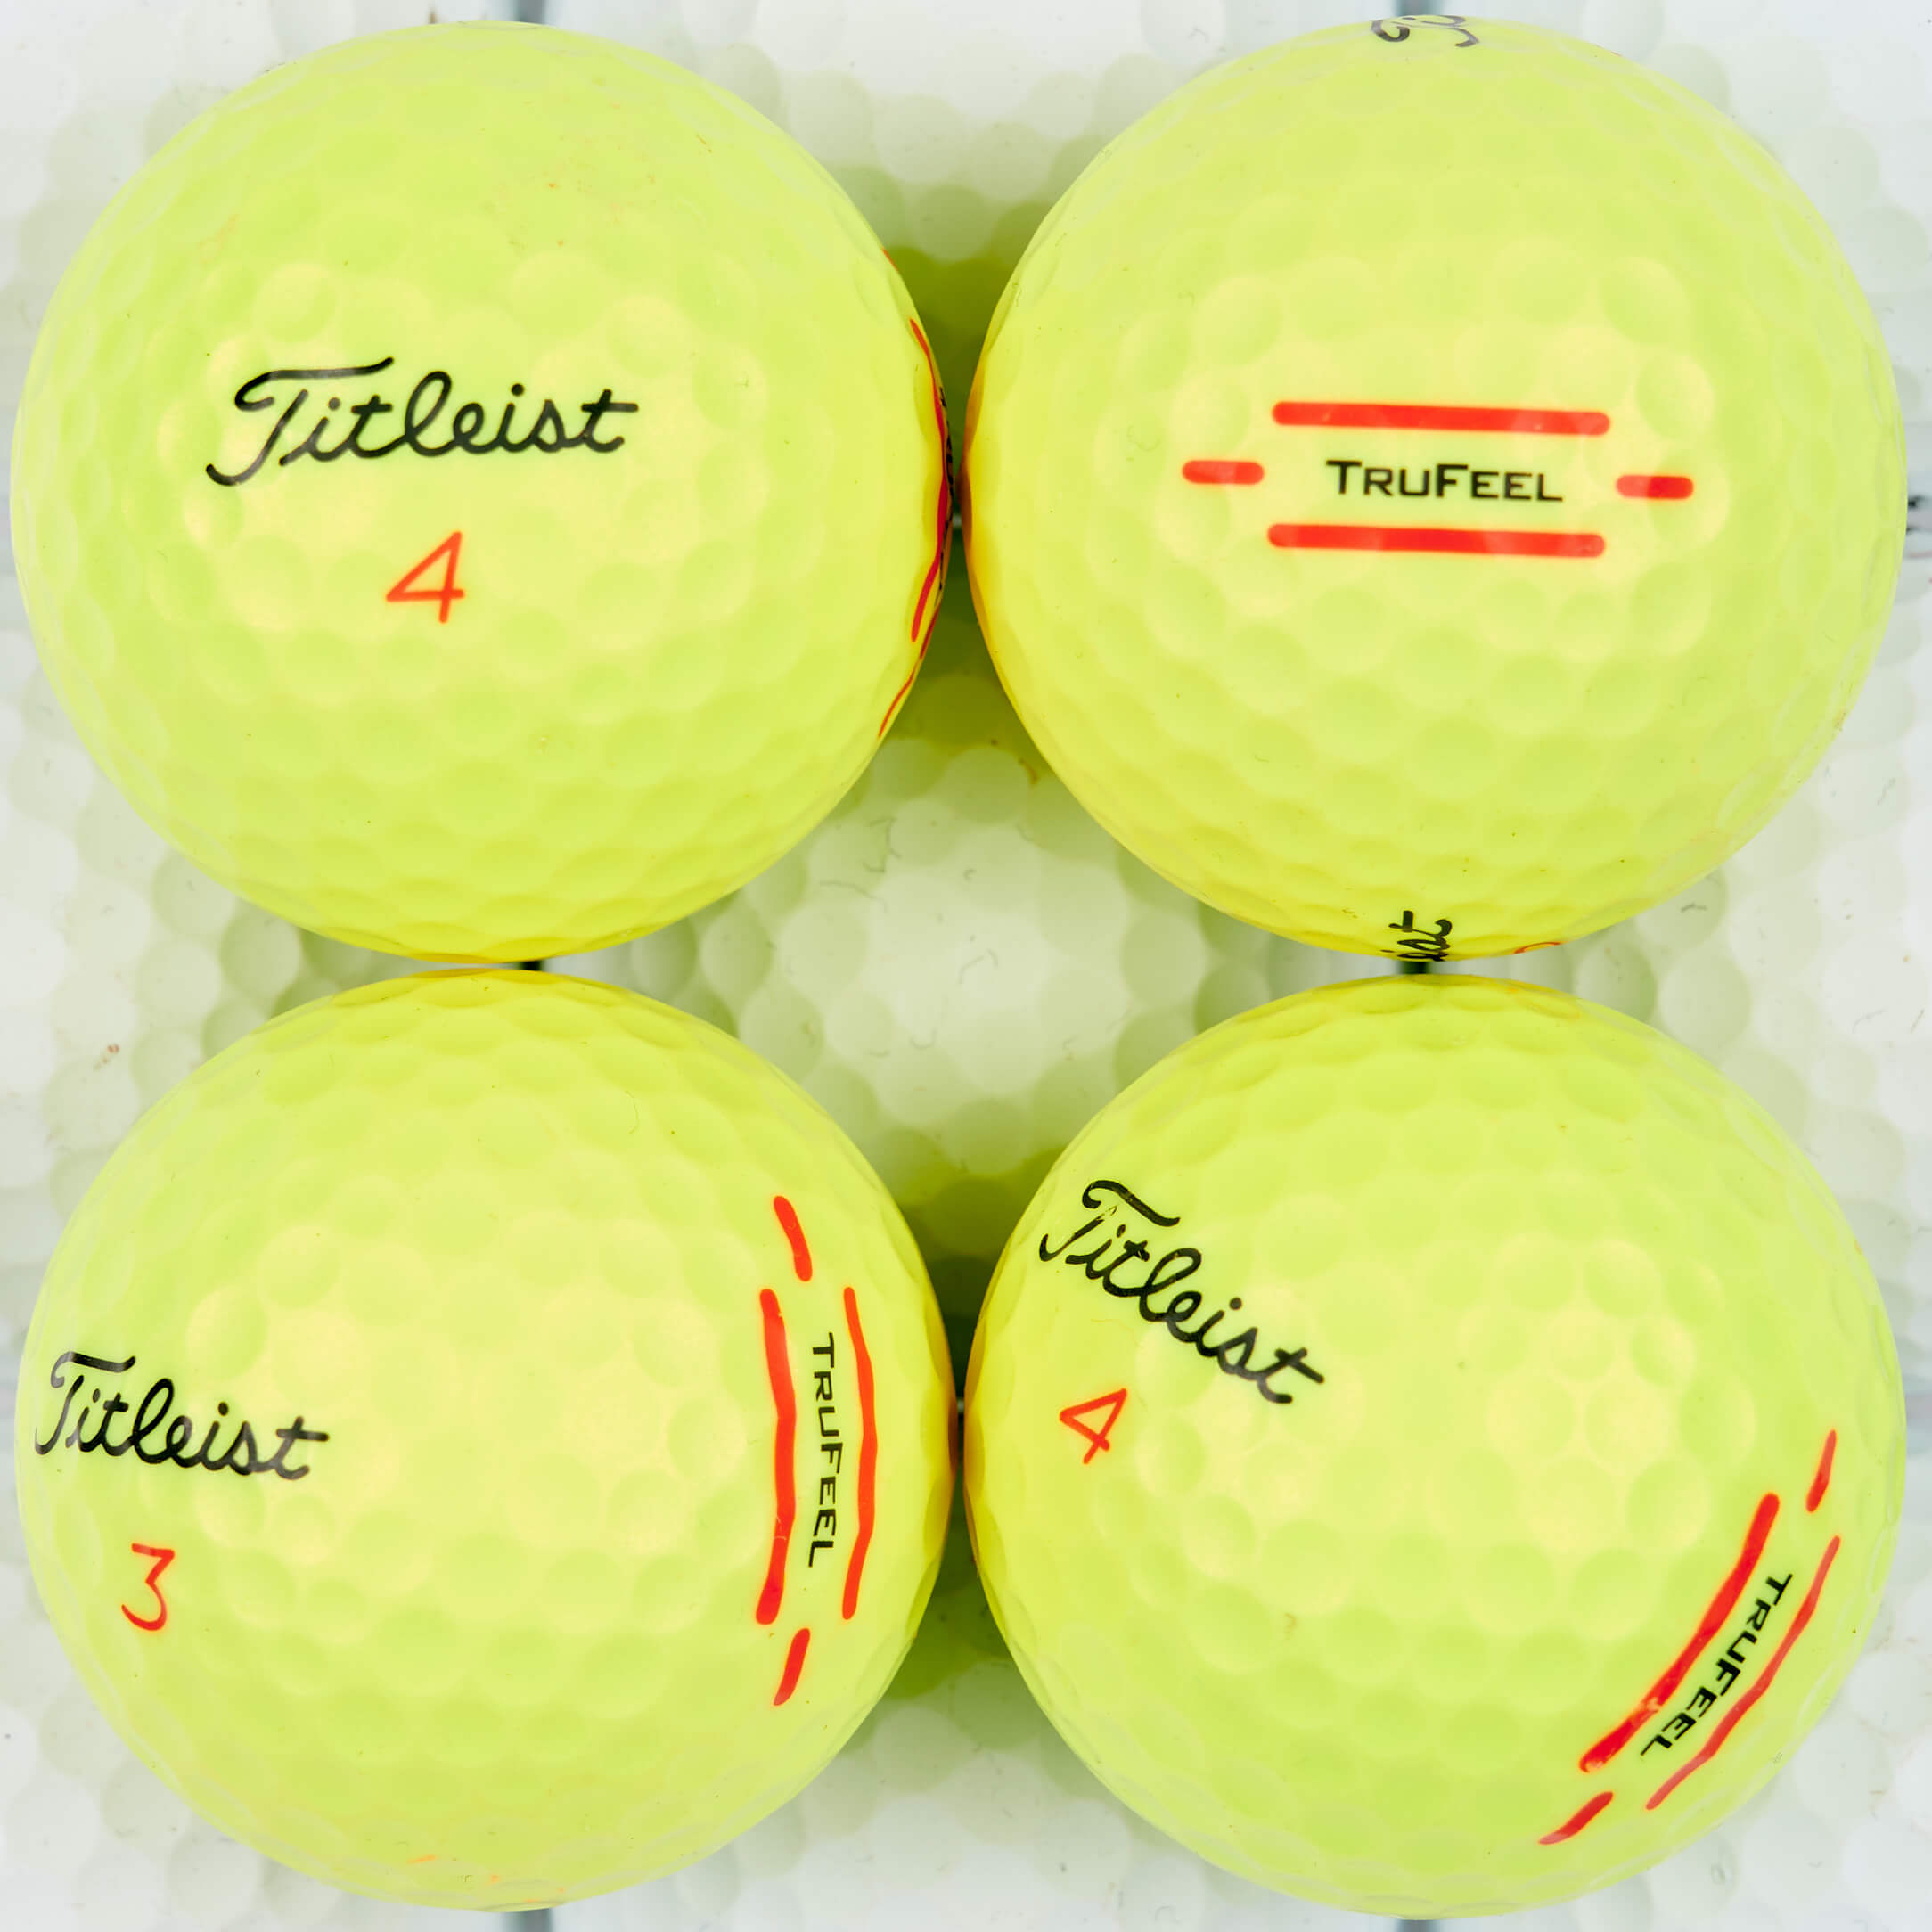 50 Titleist TruFeel Lakeballs, Yellow